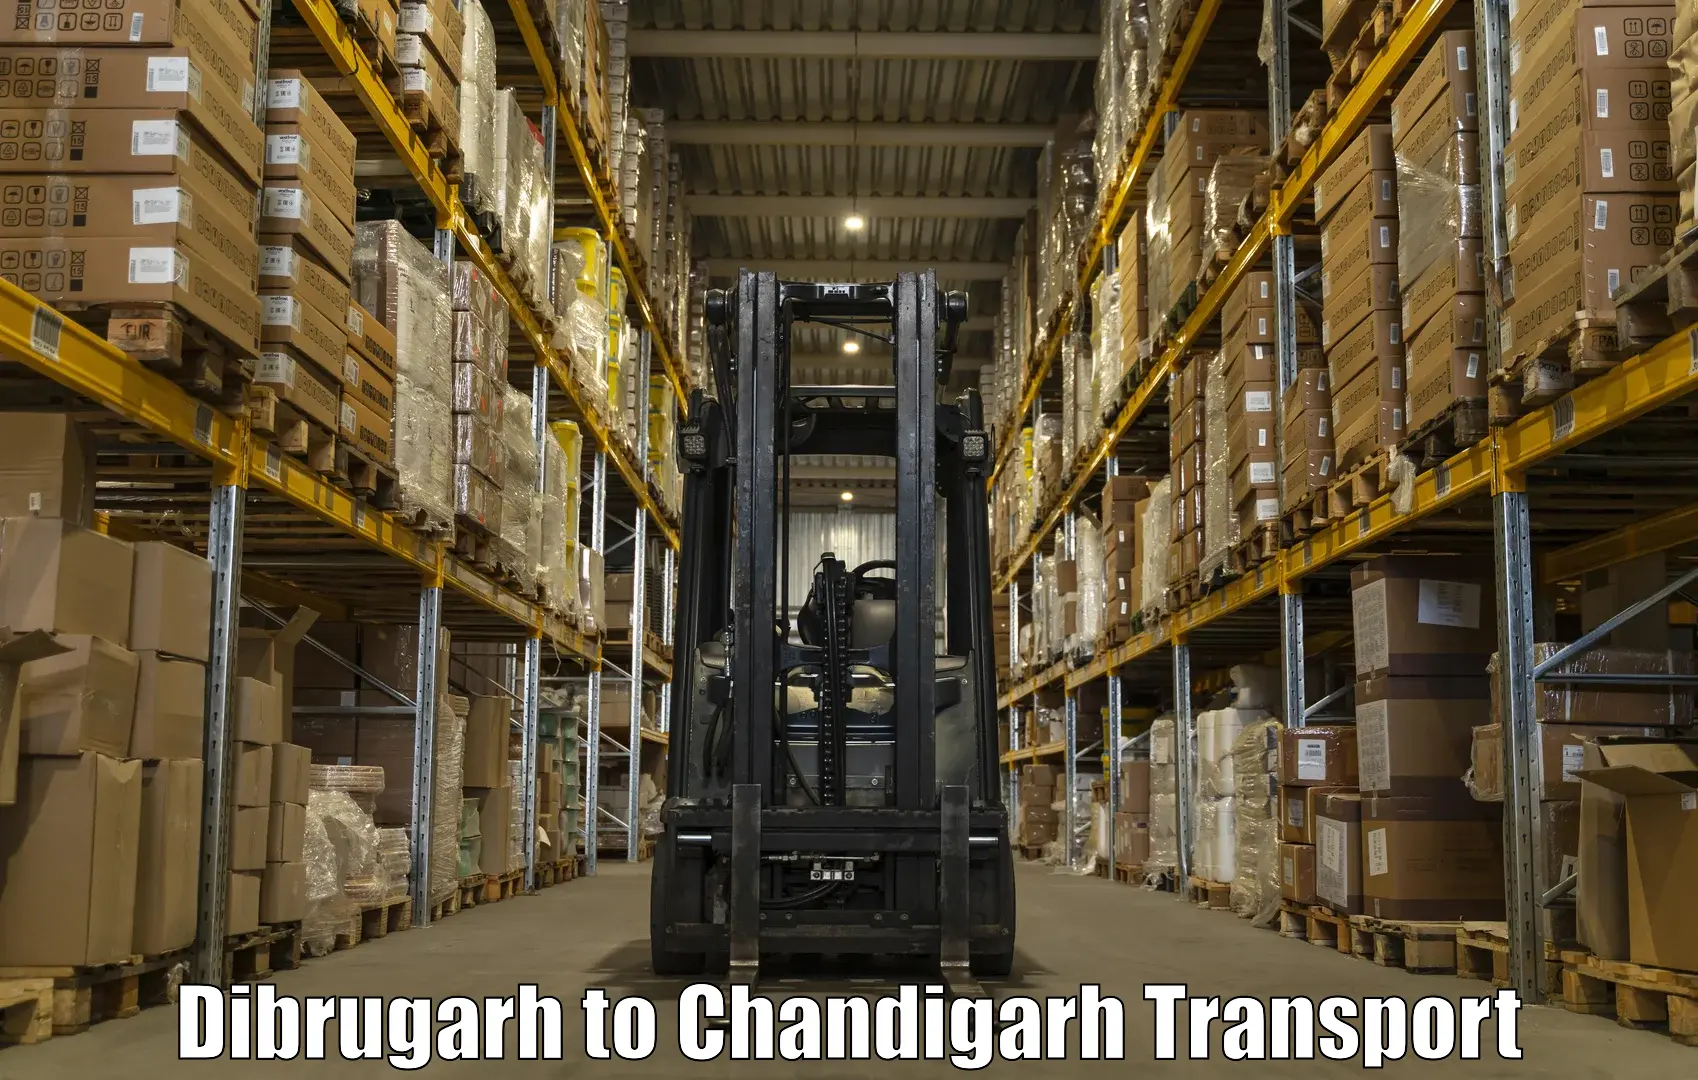 Truck transport companies in India Dibrugarh to Chandigarh